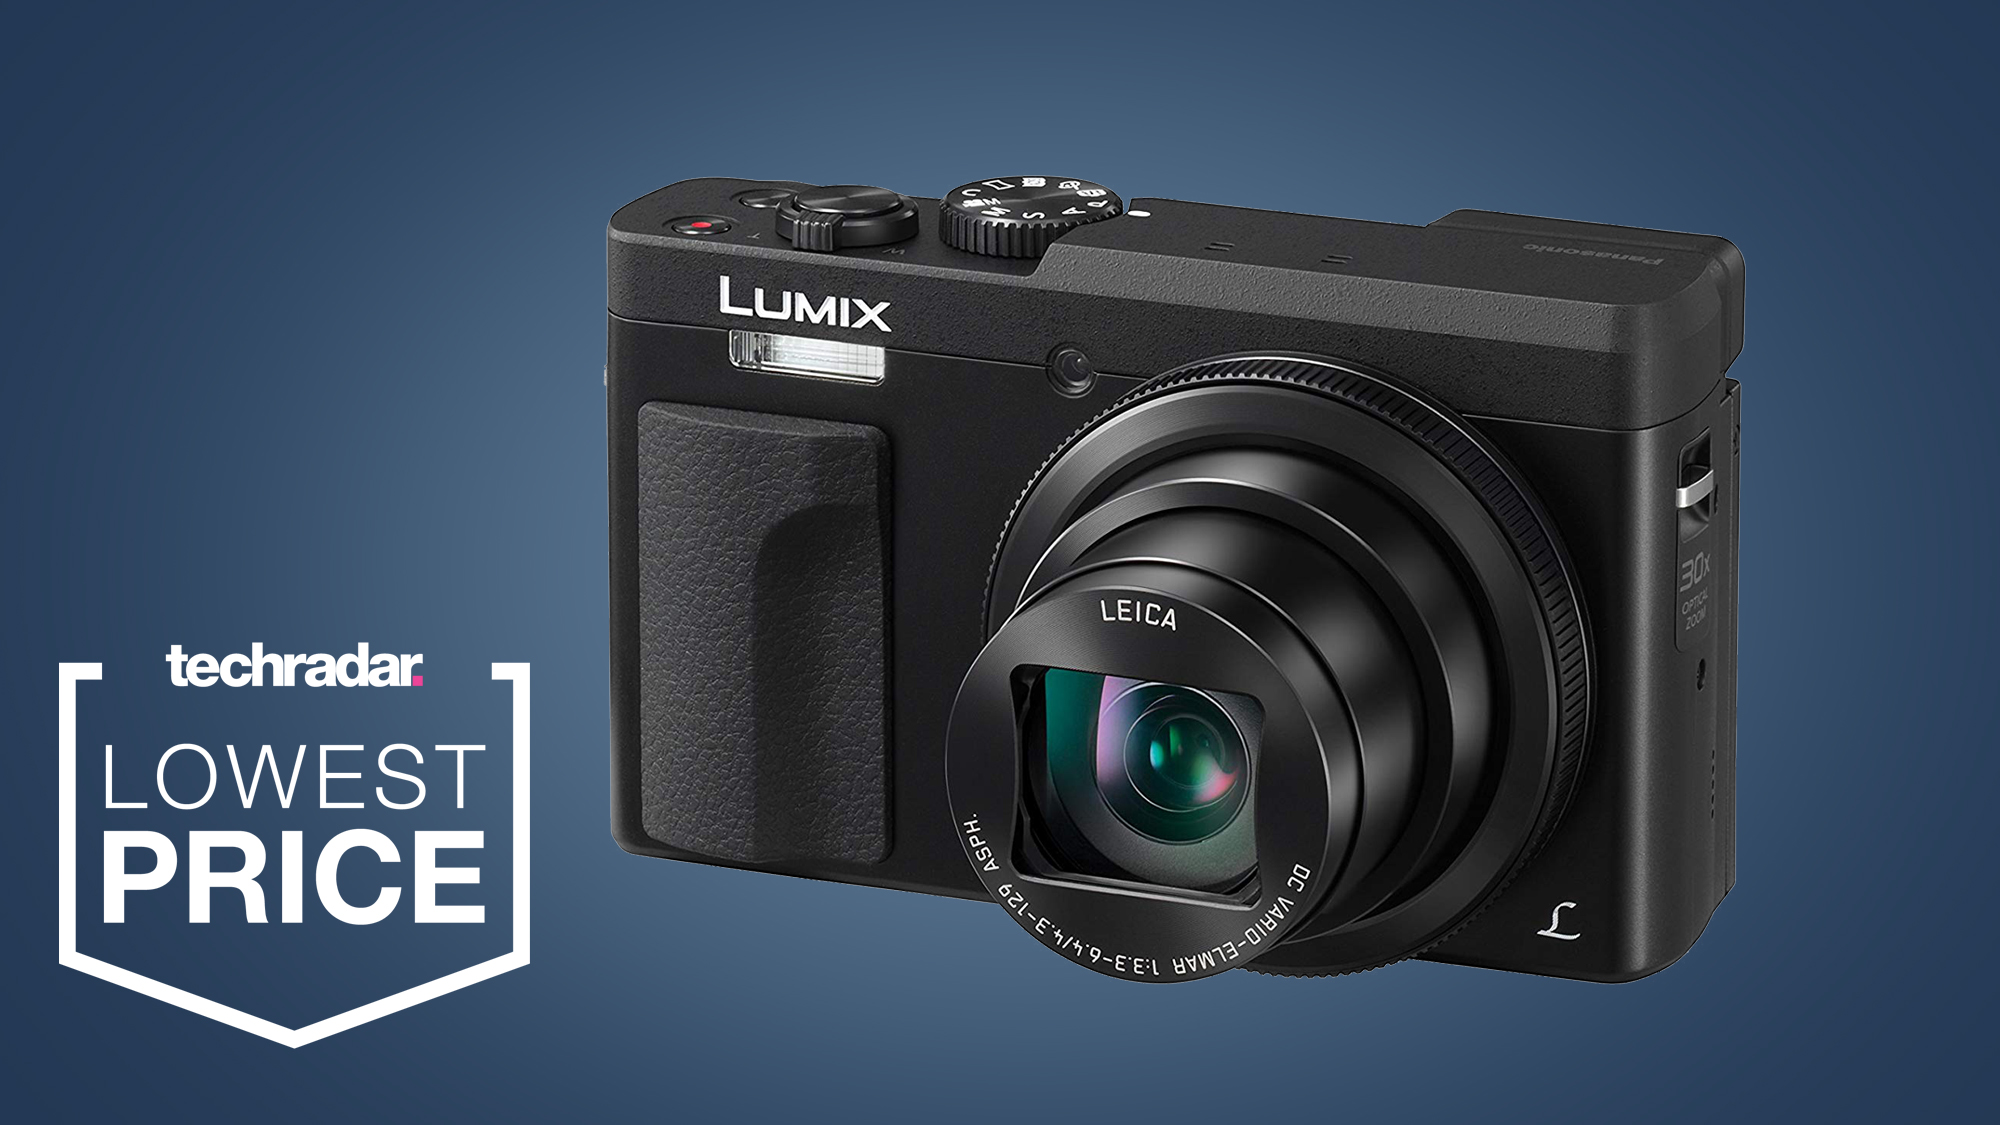 Get the Panasonic TZ90 travel compact camera for £199 in this 40% price slash | TechRadar